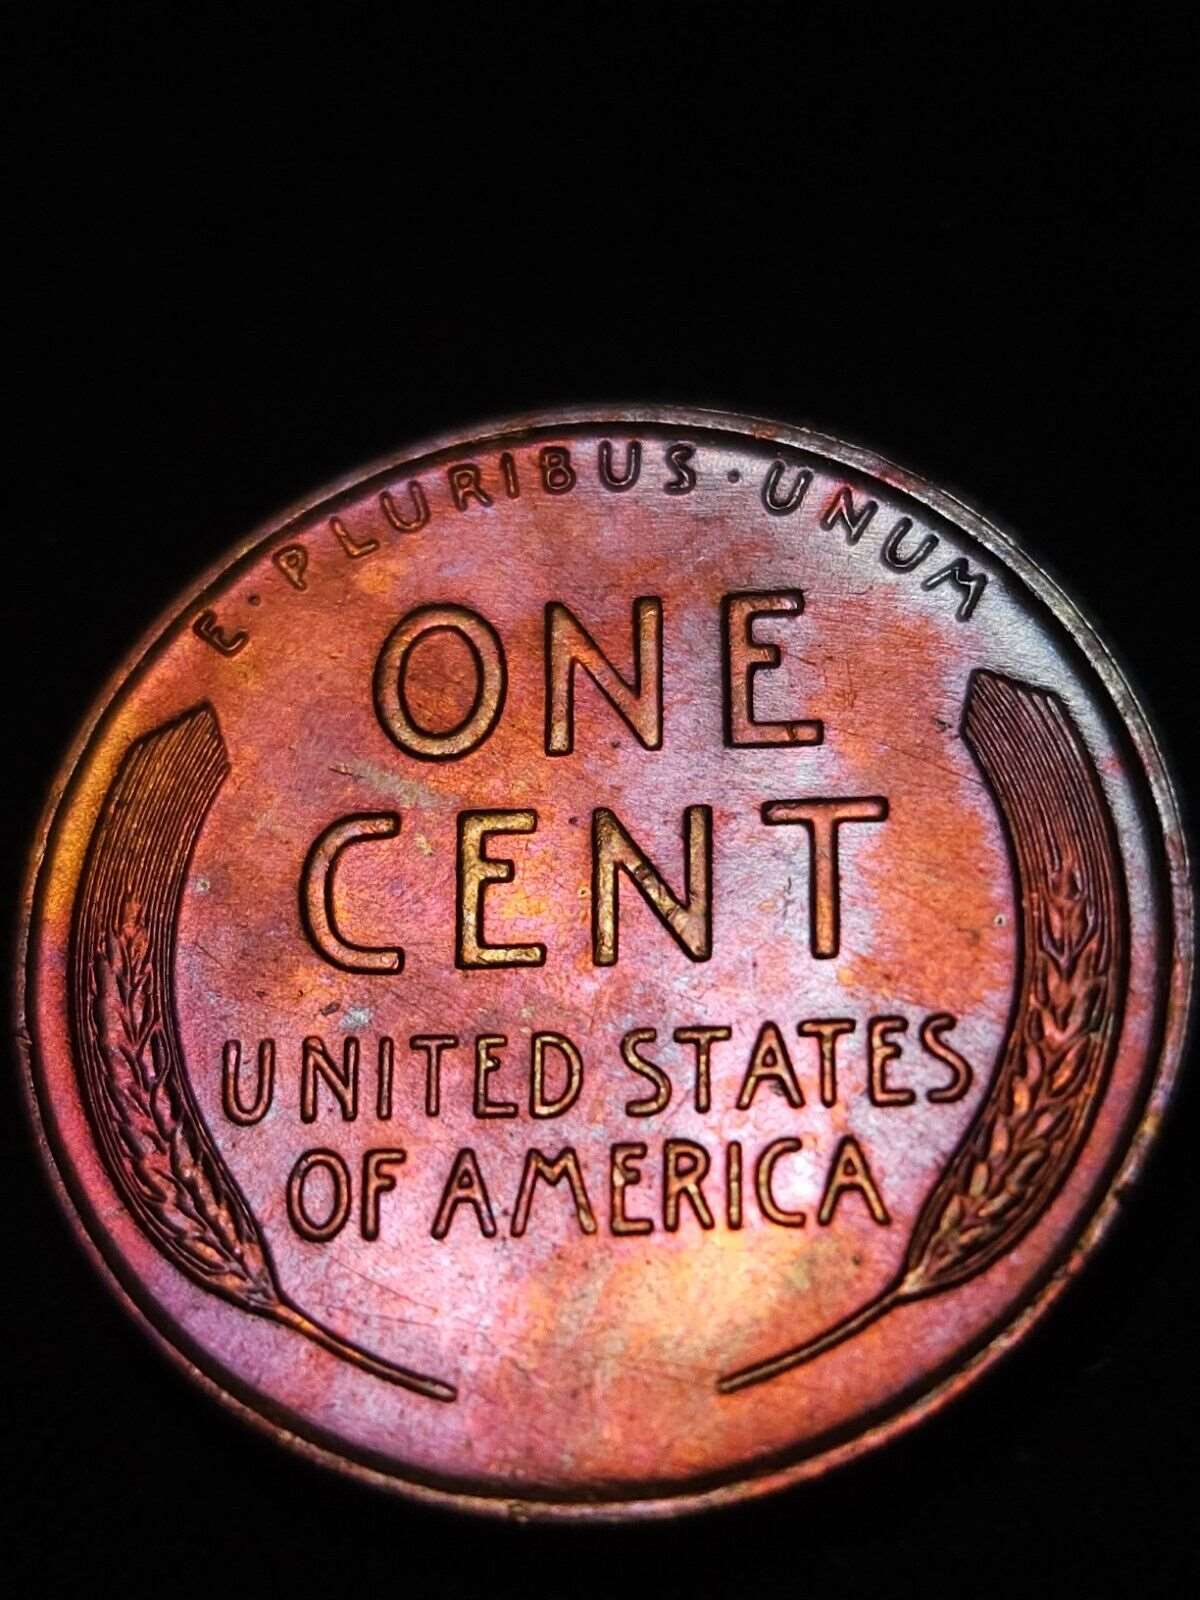 1954-D Rainbow Toned Lincoln Wheat Cent Bu